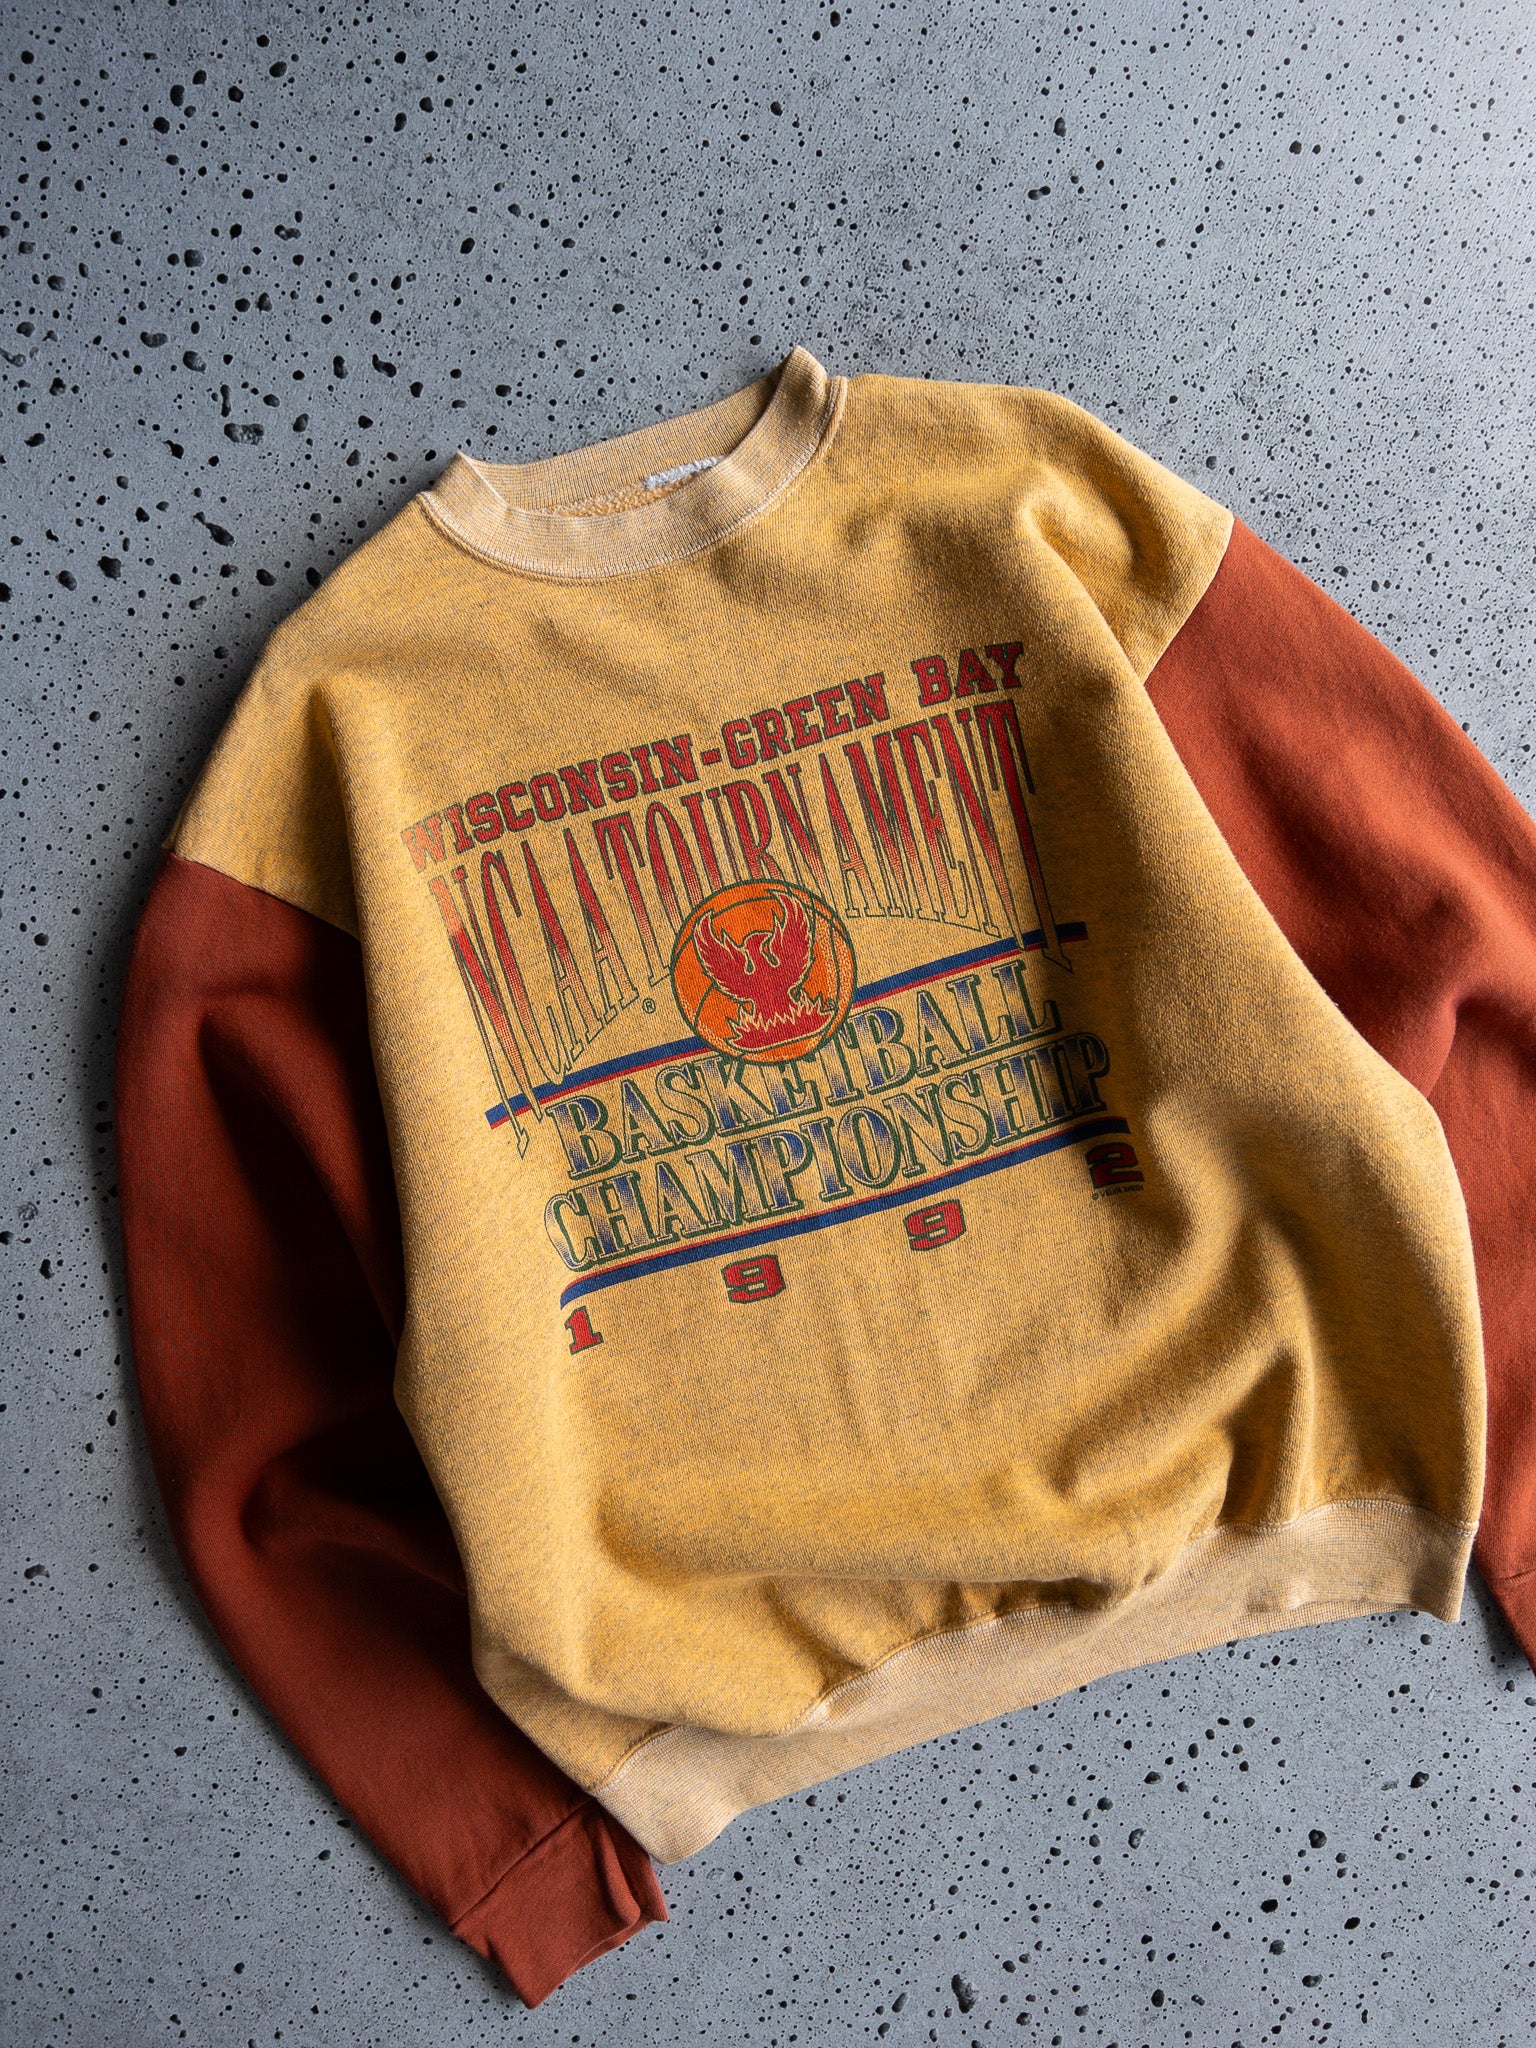 Vintage Wisconsin-Green Bay 1992 Sweatshirt (L)